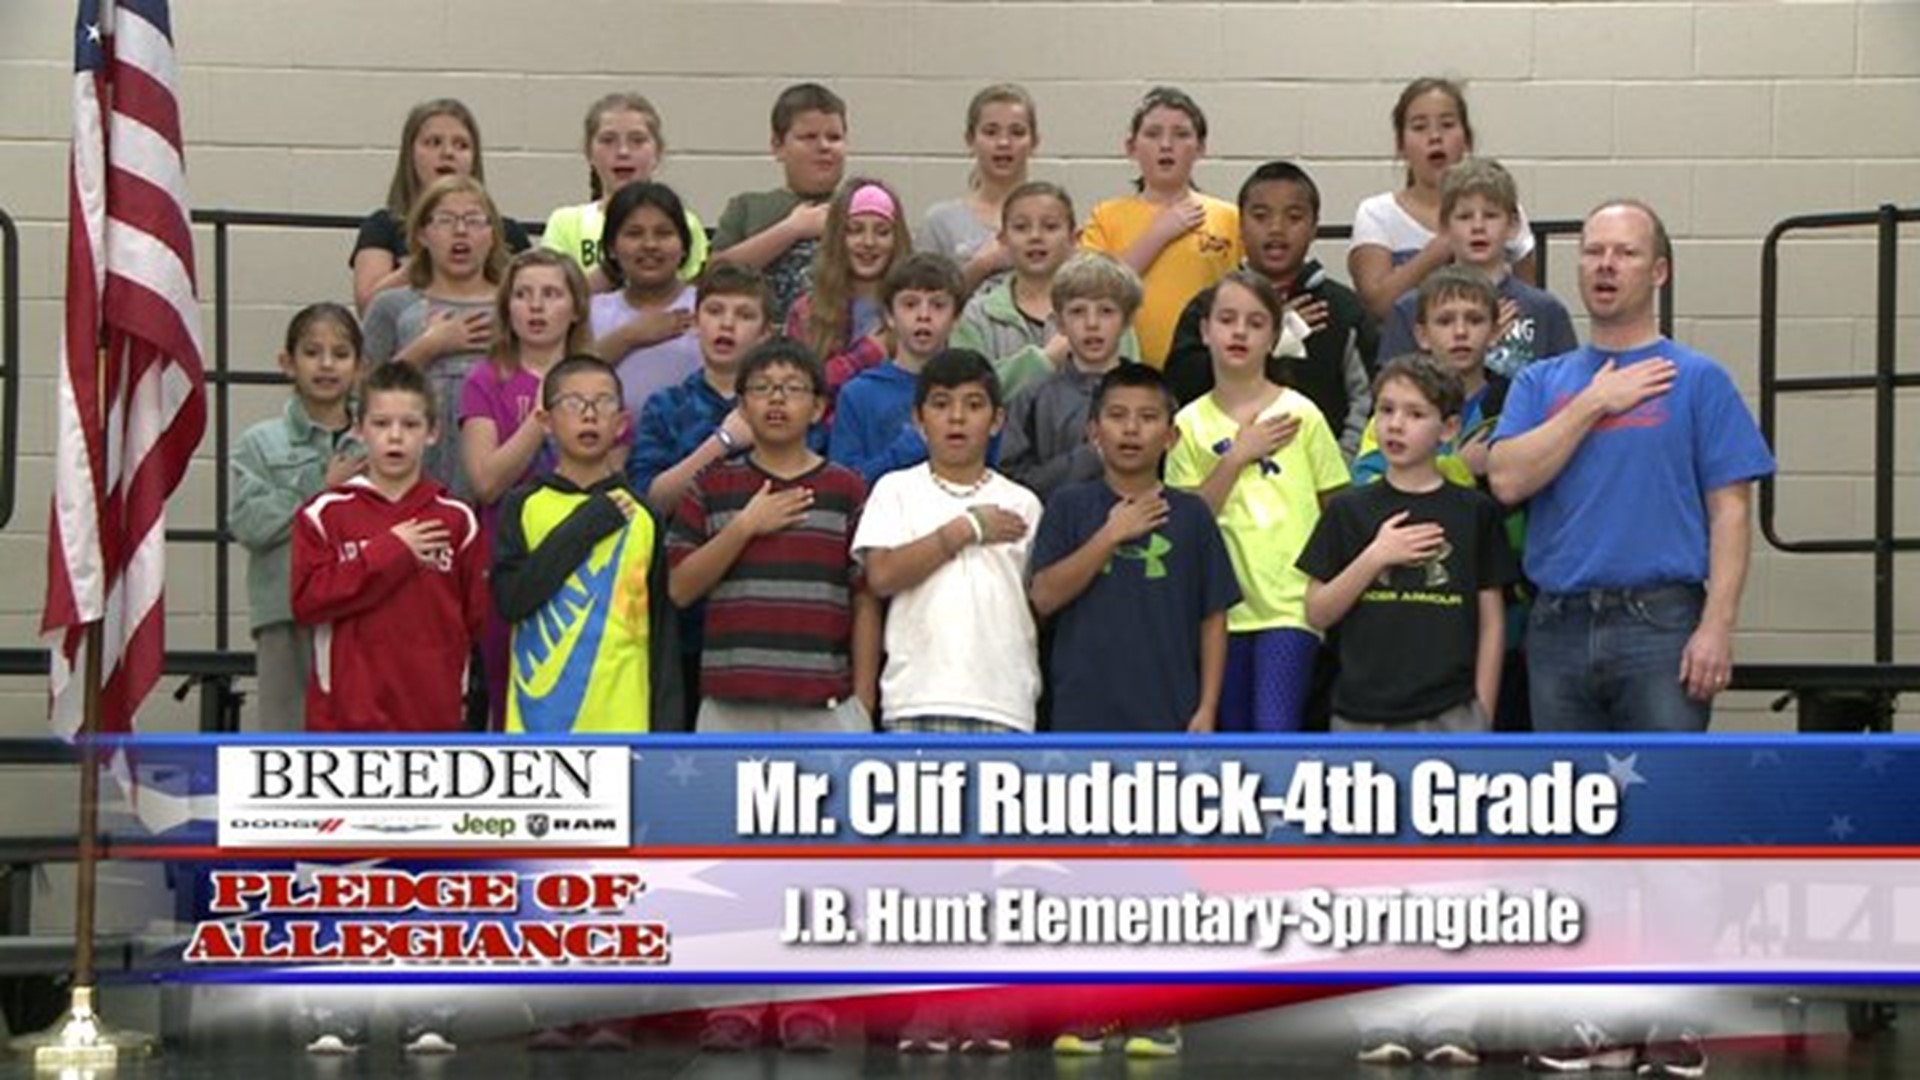 J.B. Hunt Elementary - Springdale, Mr. Ruddick - Fourth Grade